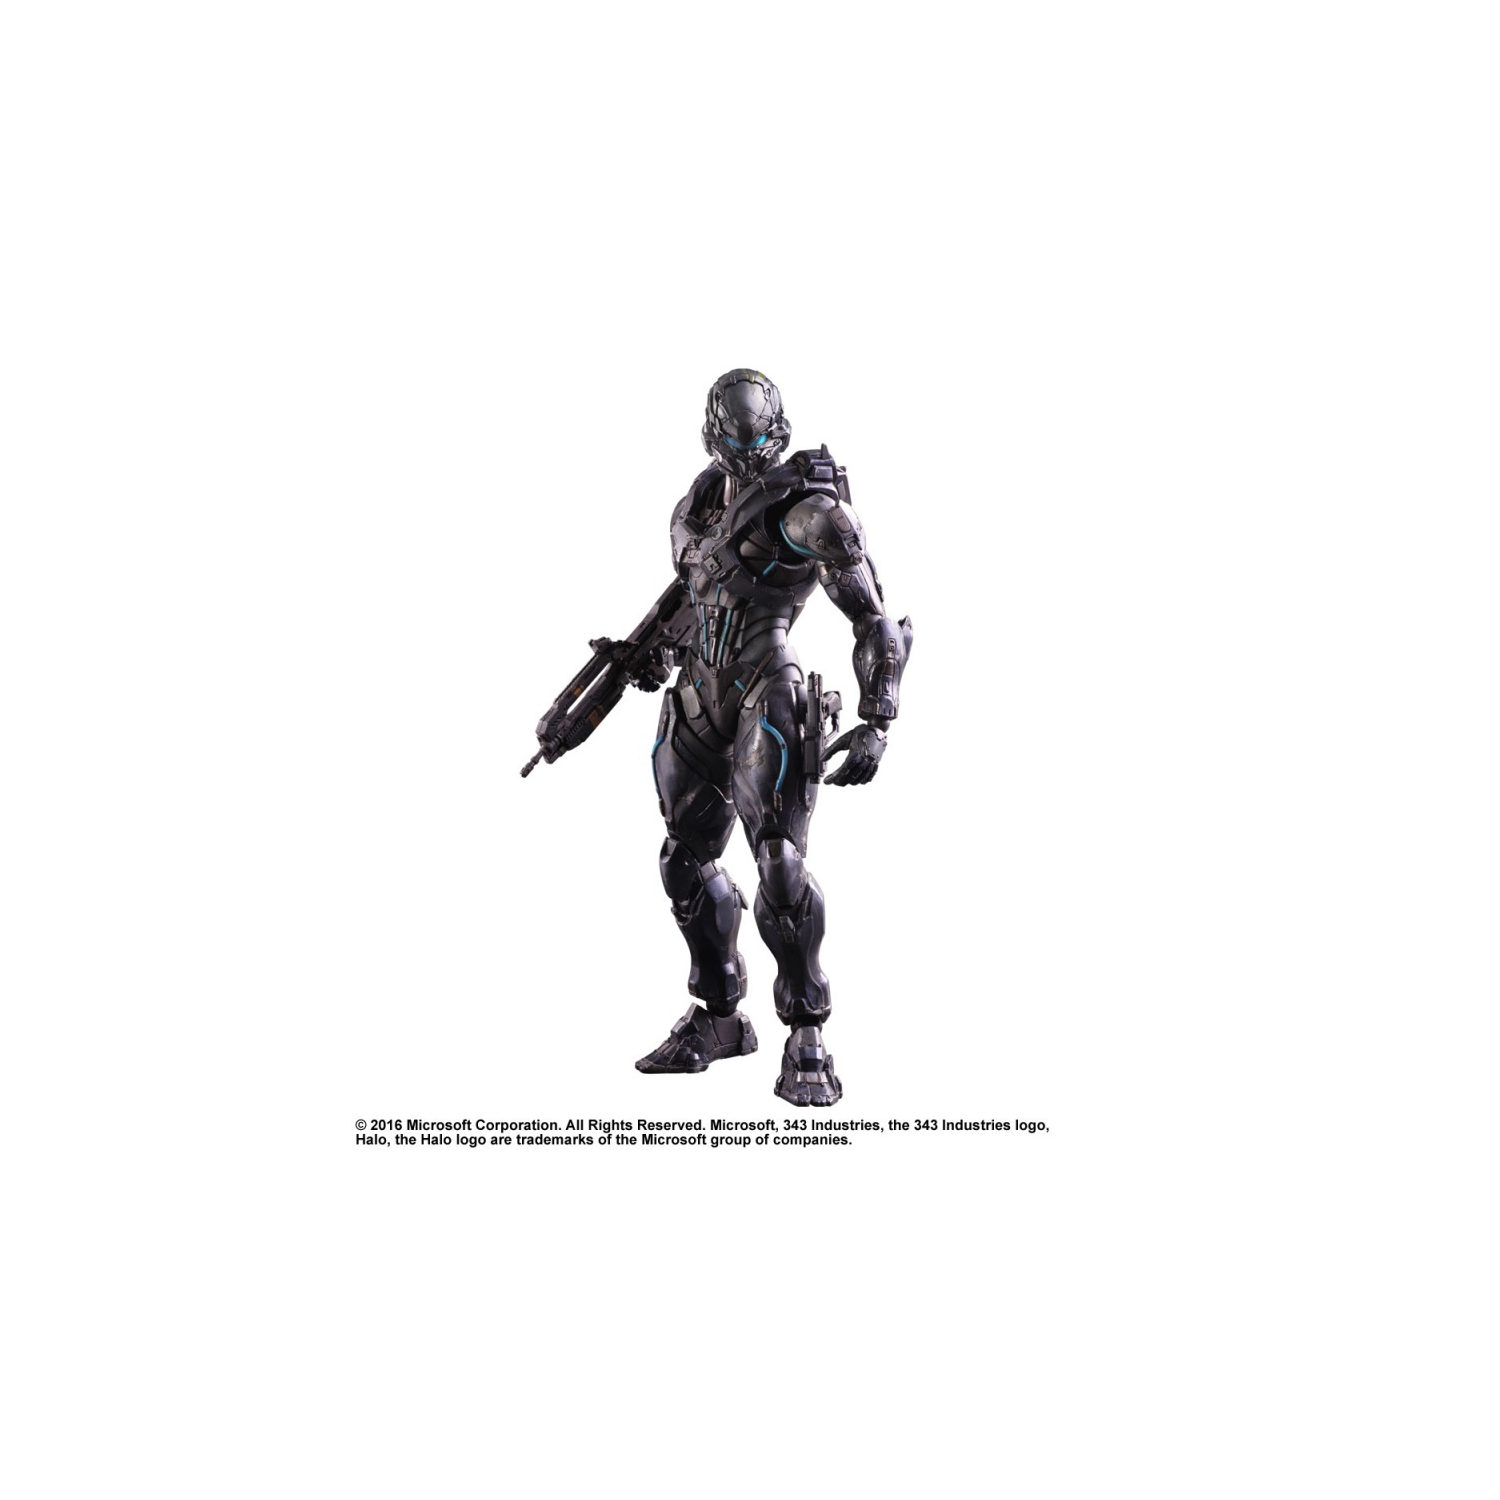 Halo 5 10 Inch Action Figure Play Arts Kai Series - Spartan Locke